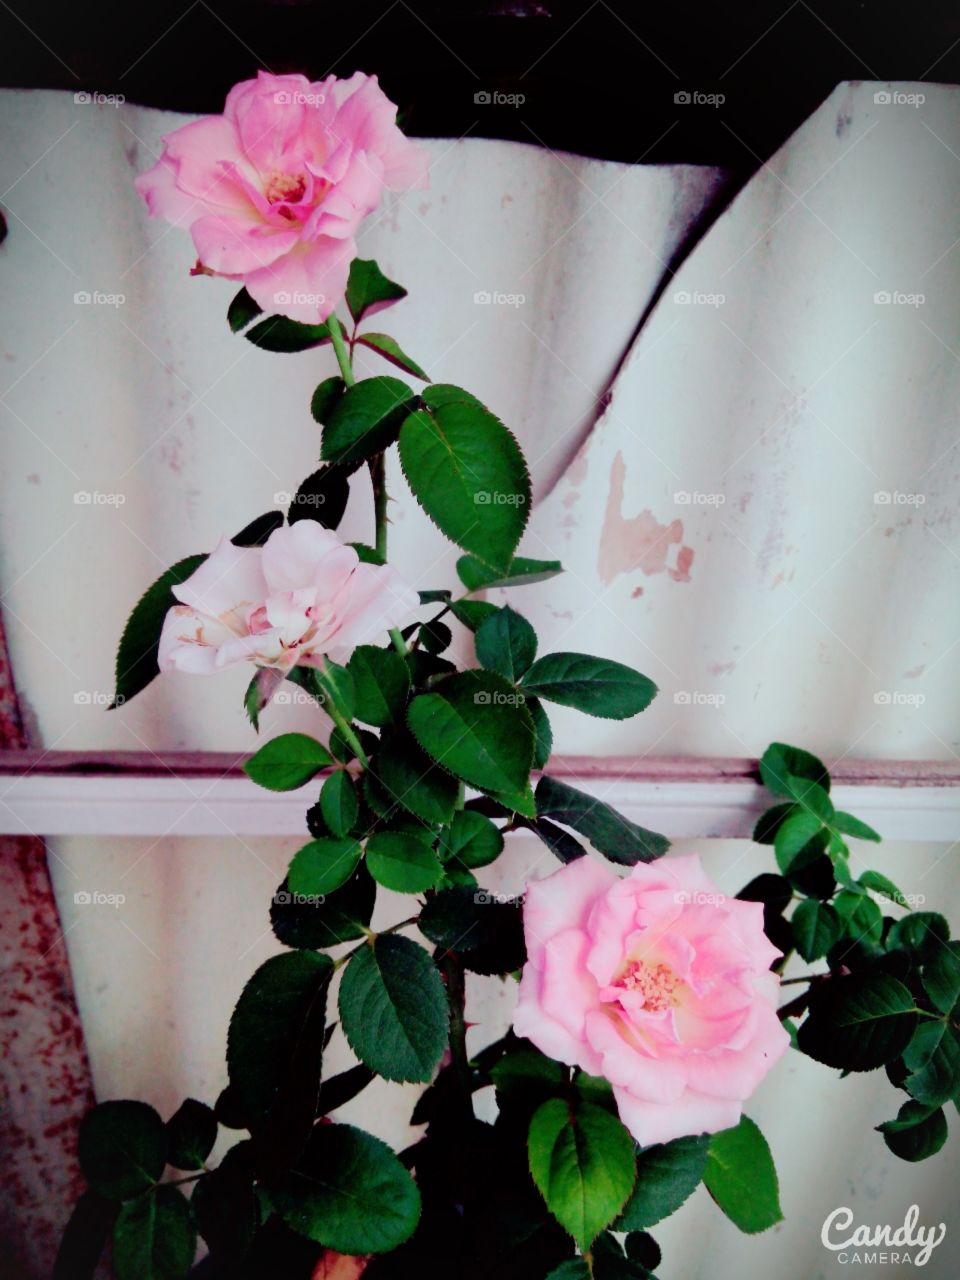 rose. romantic rose